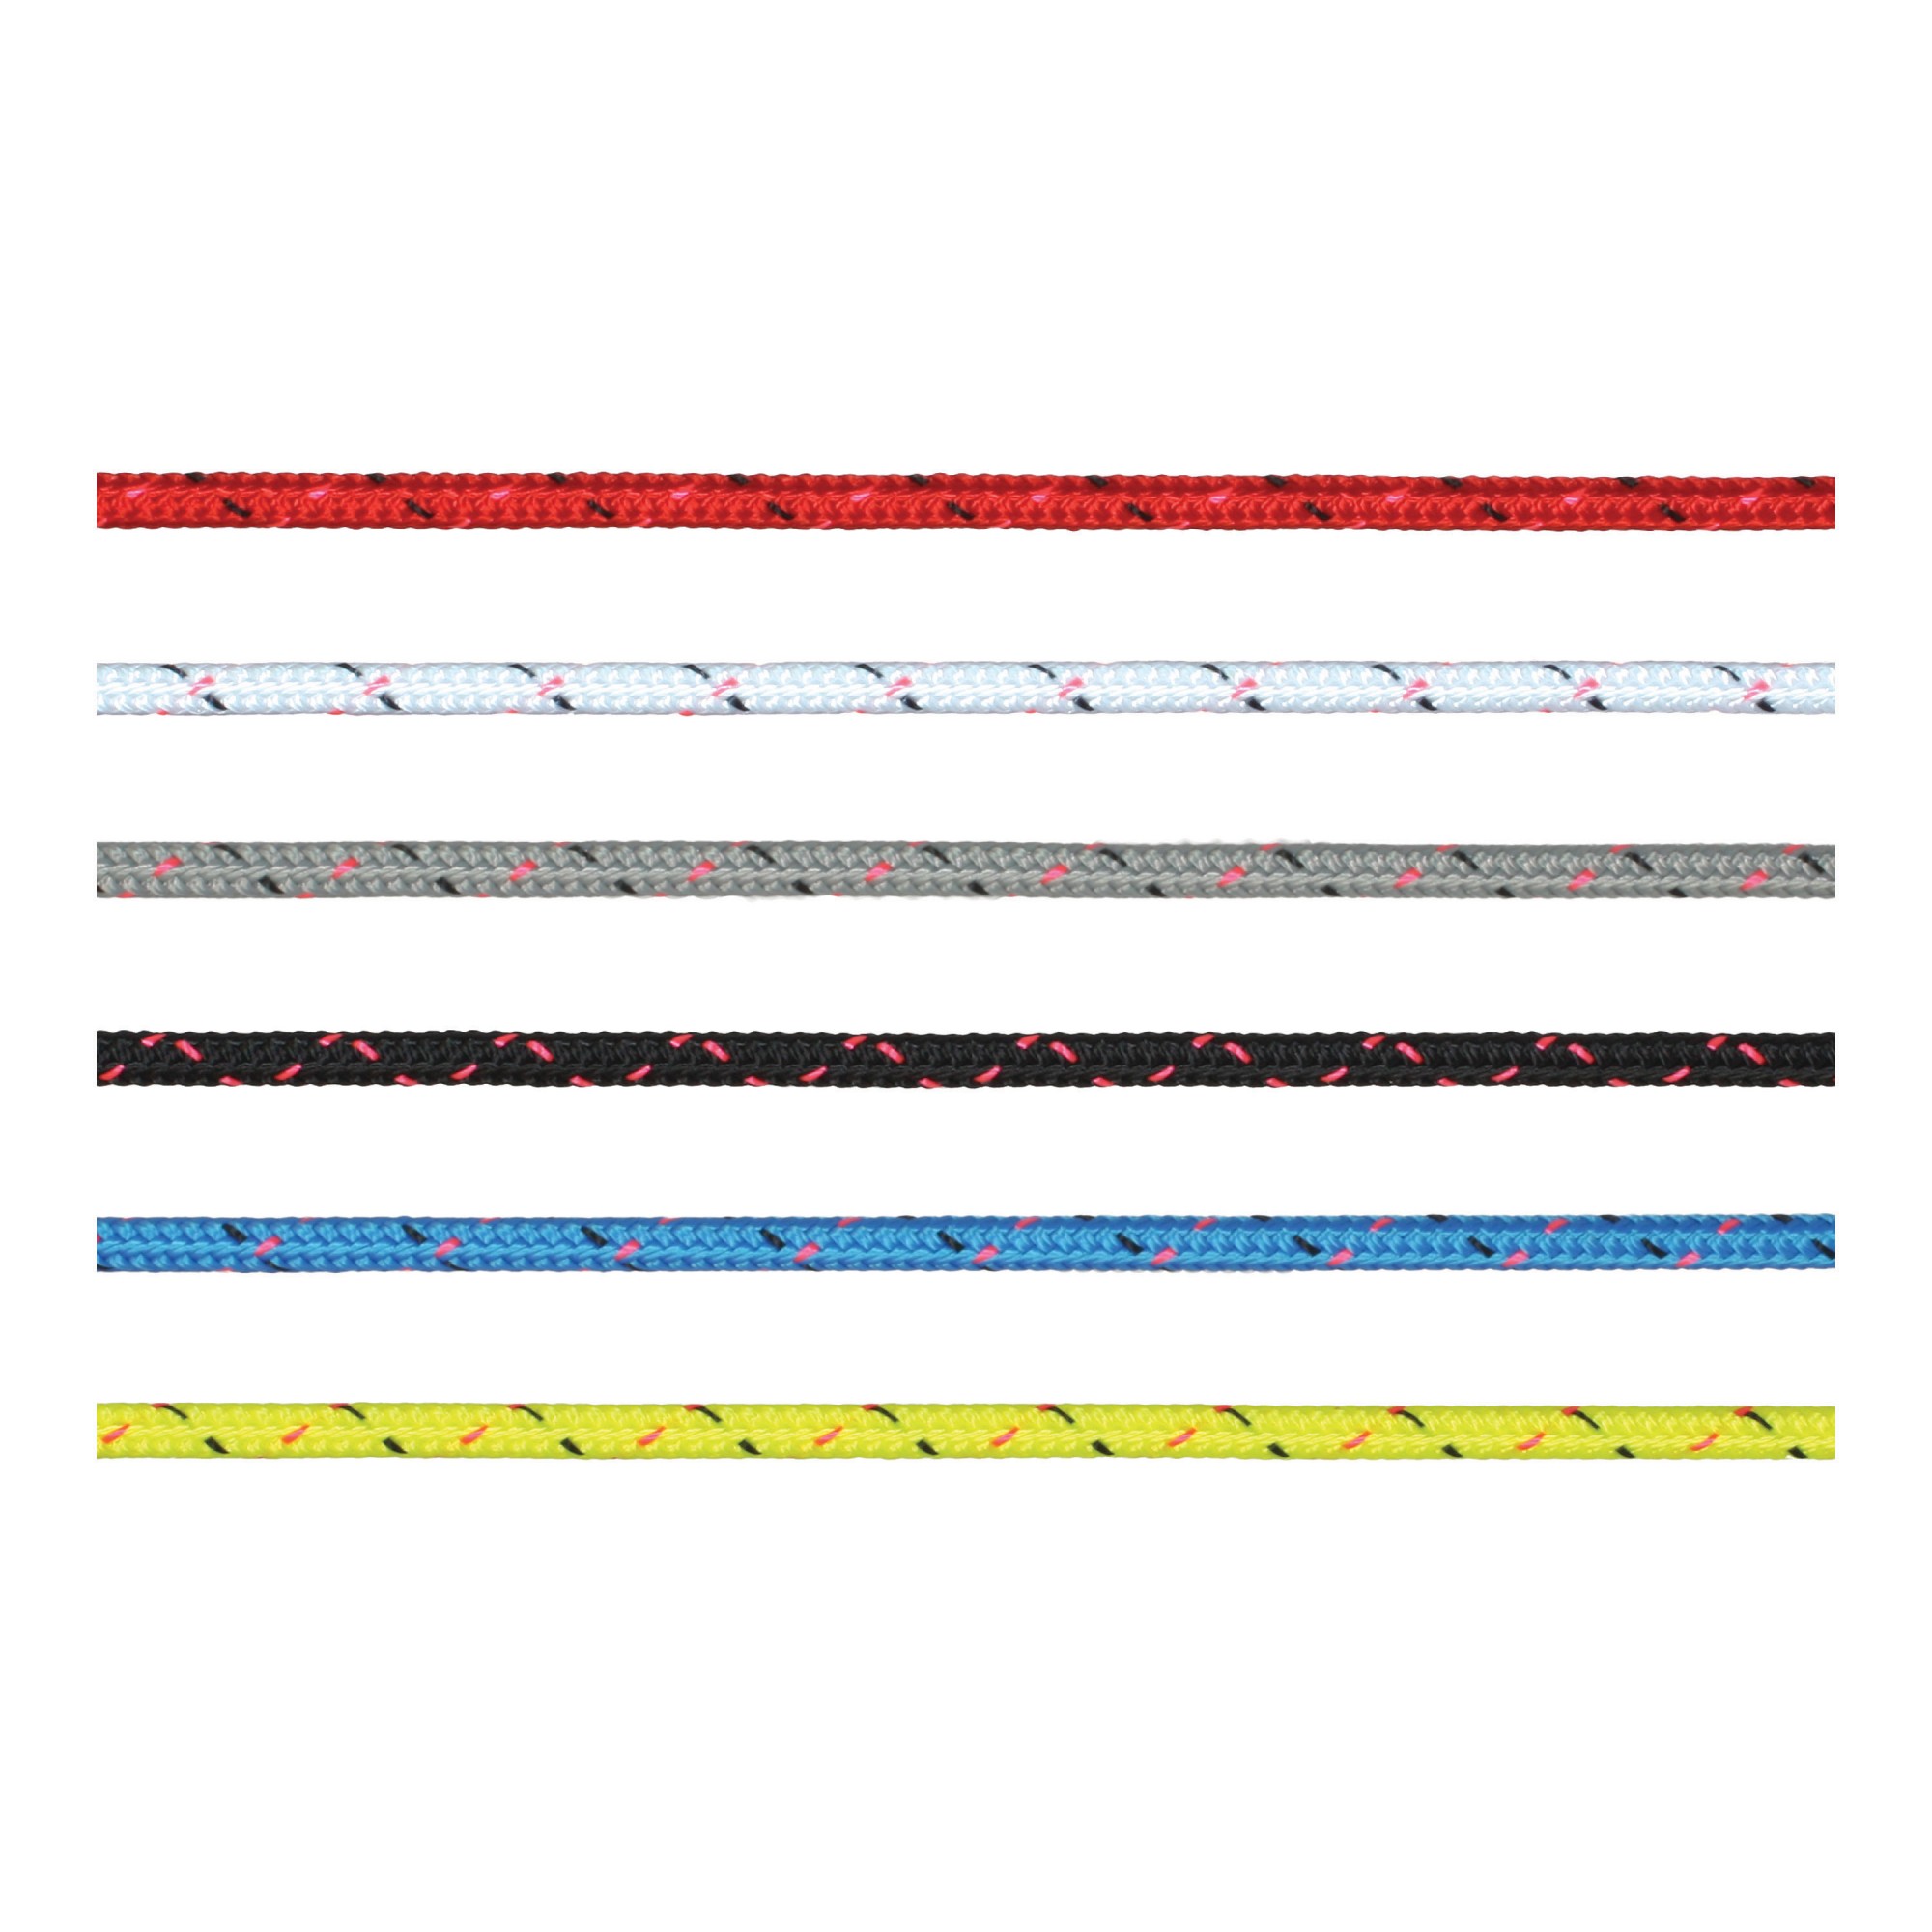 Трос Marlow Excel Pro из полиэстера цвета лайм 200 м диаметр 3 мм, Osculati 06.465.03LI